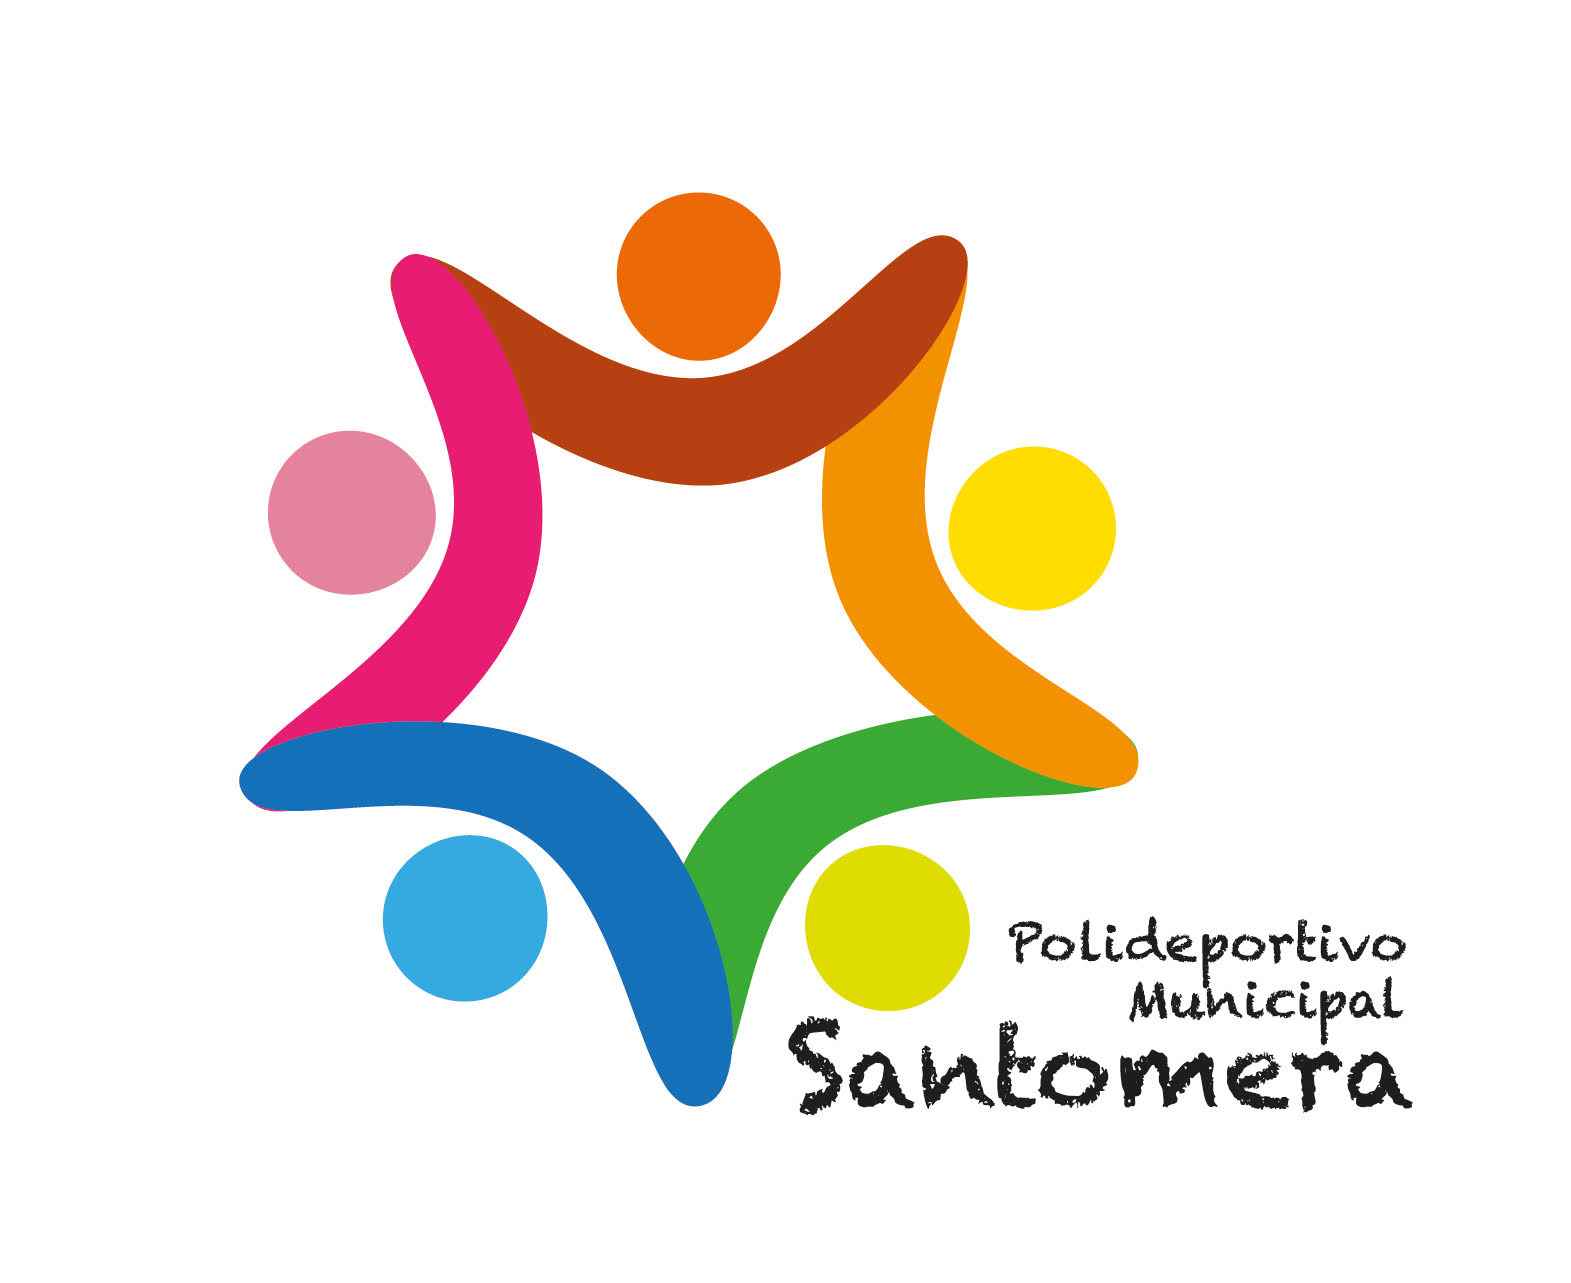 Open Santomera